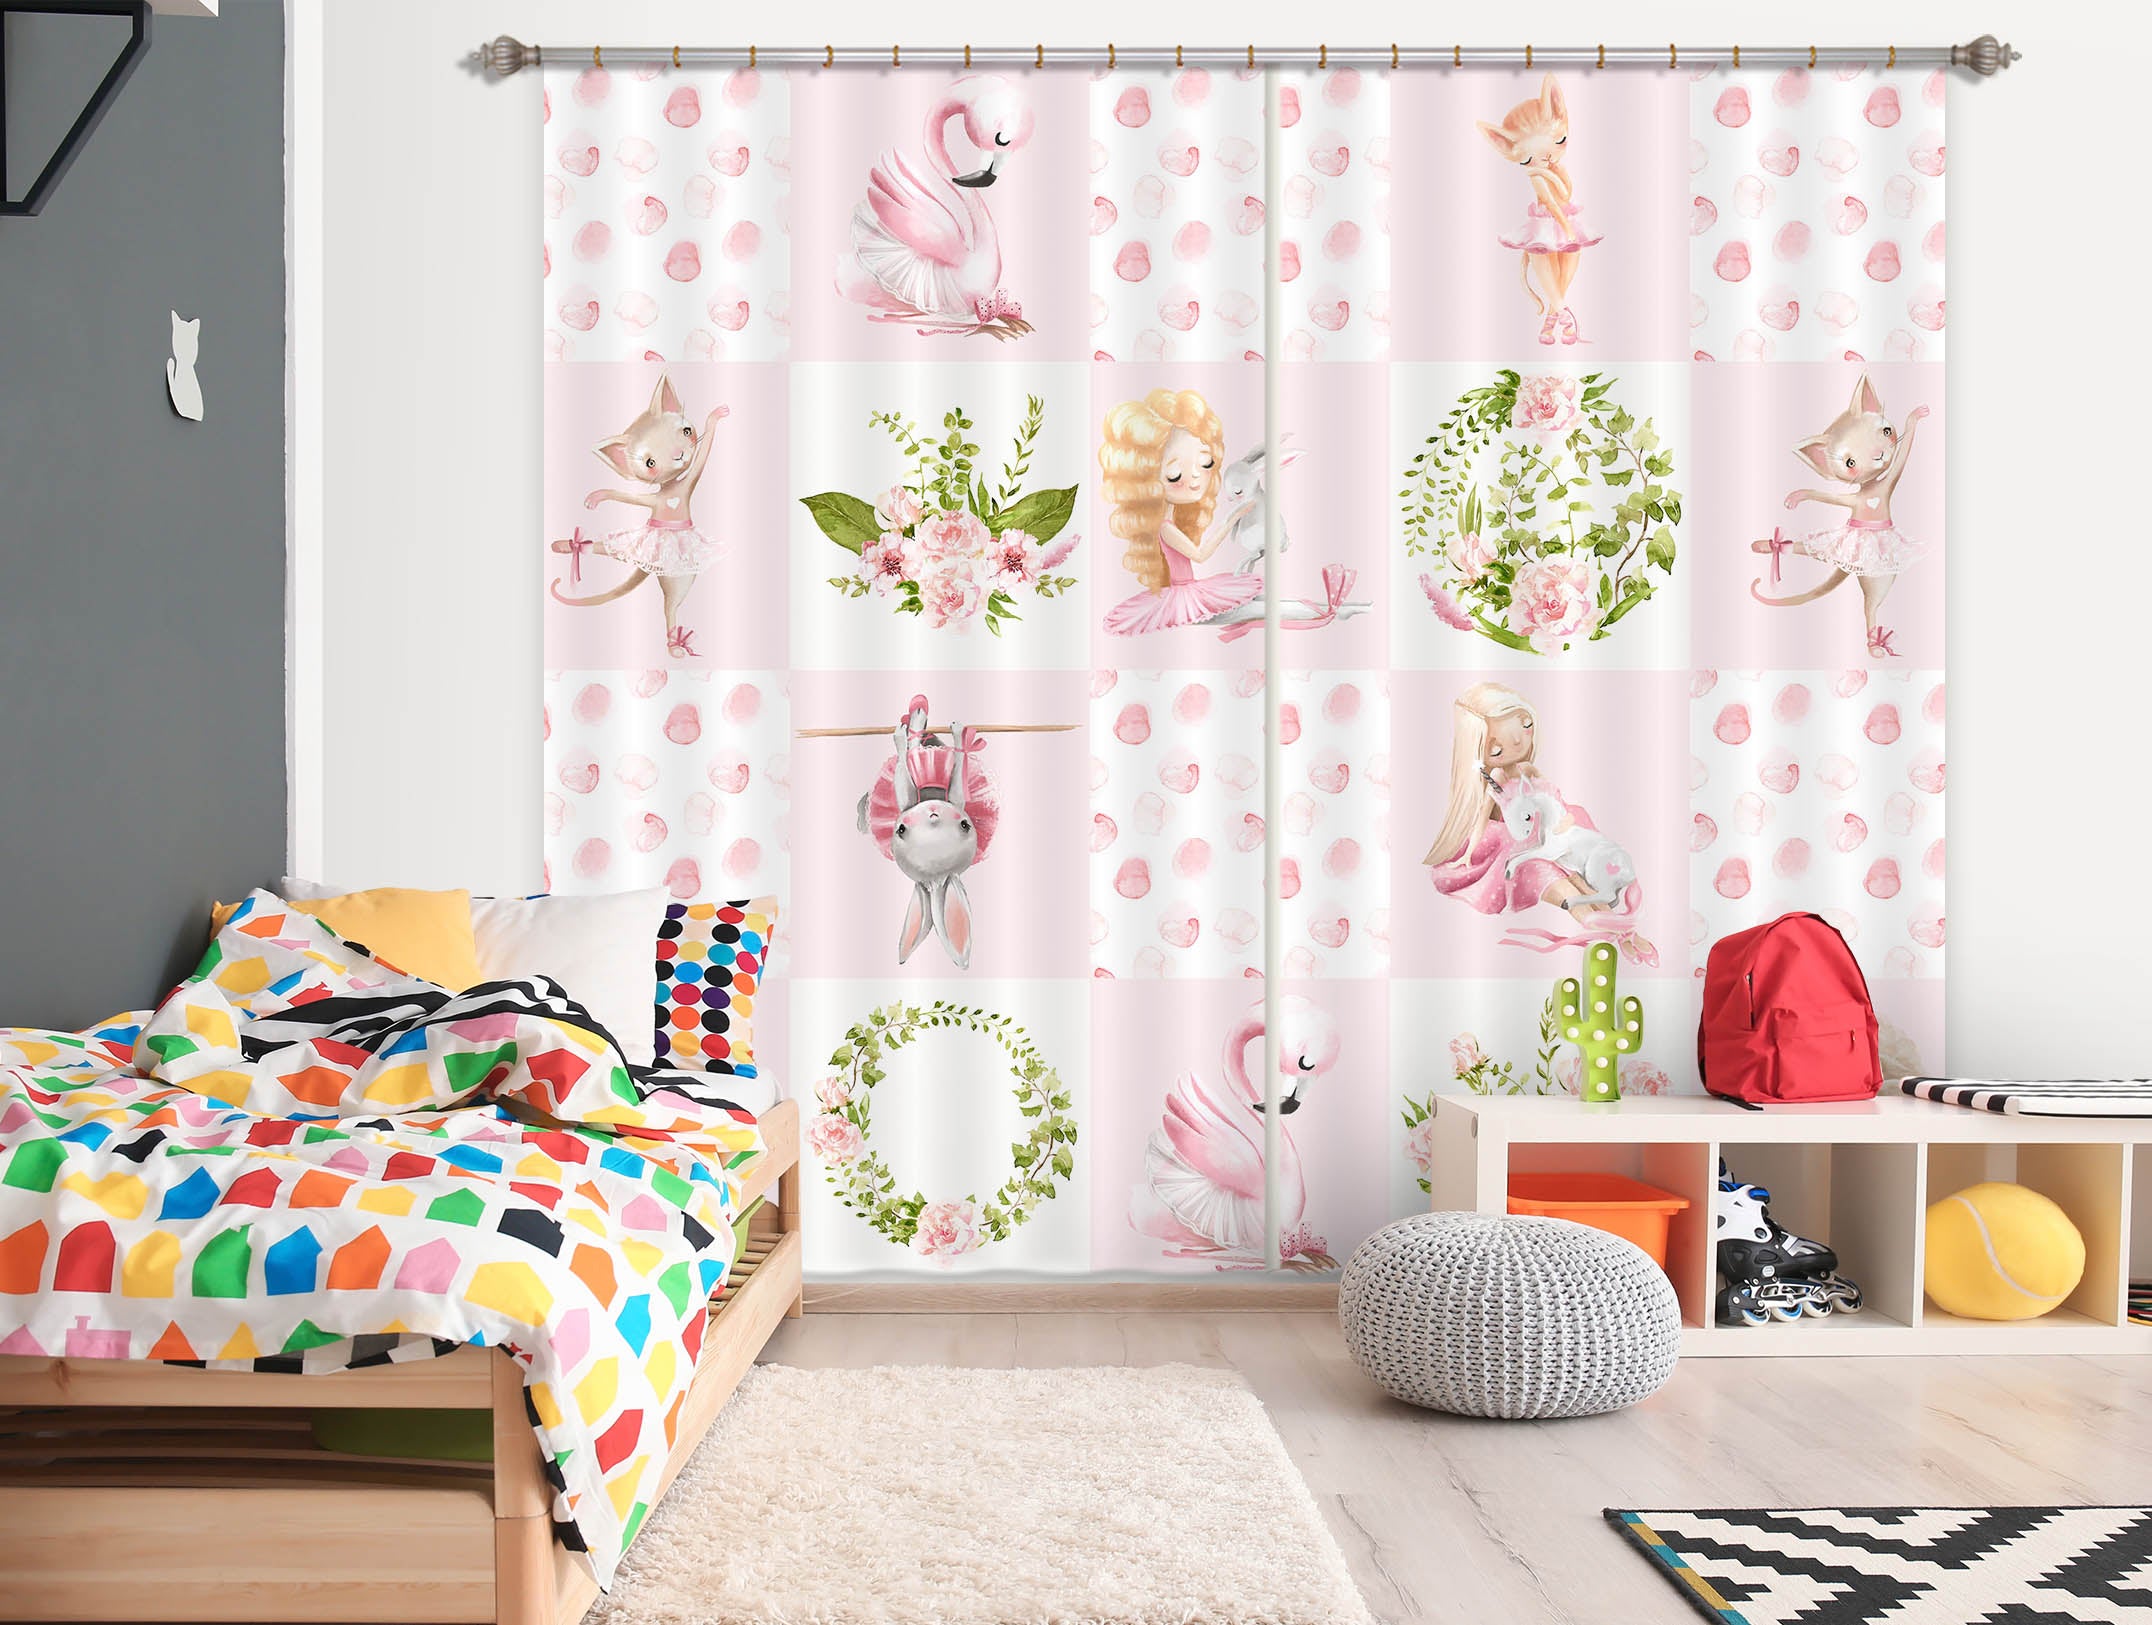 3D Rabbit Flamingo 118 Uta Naumann Curtain Curtains Drapes